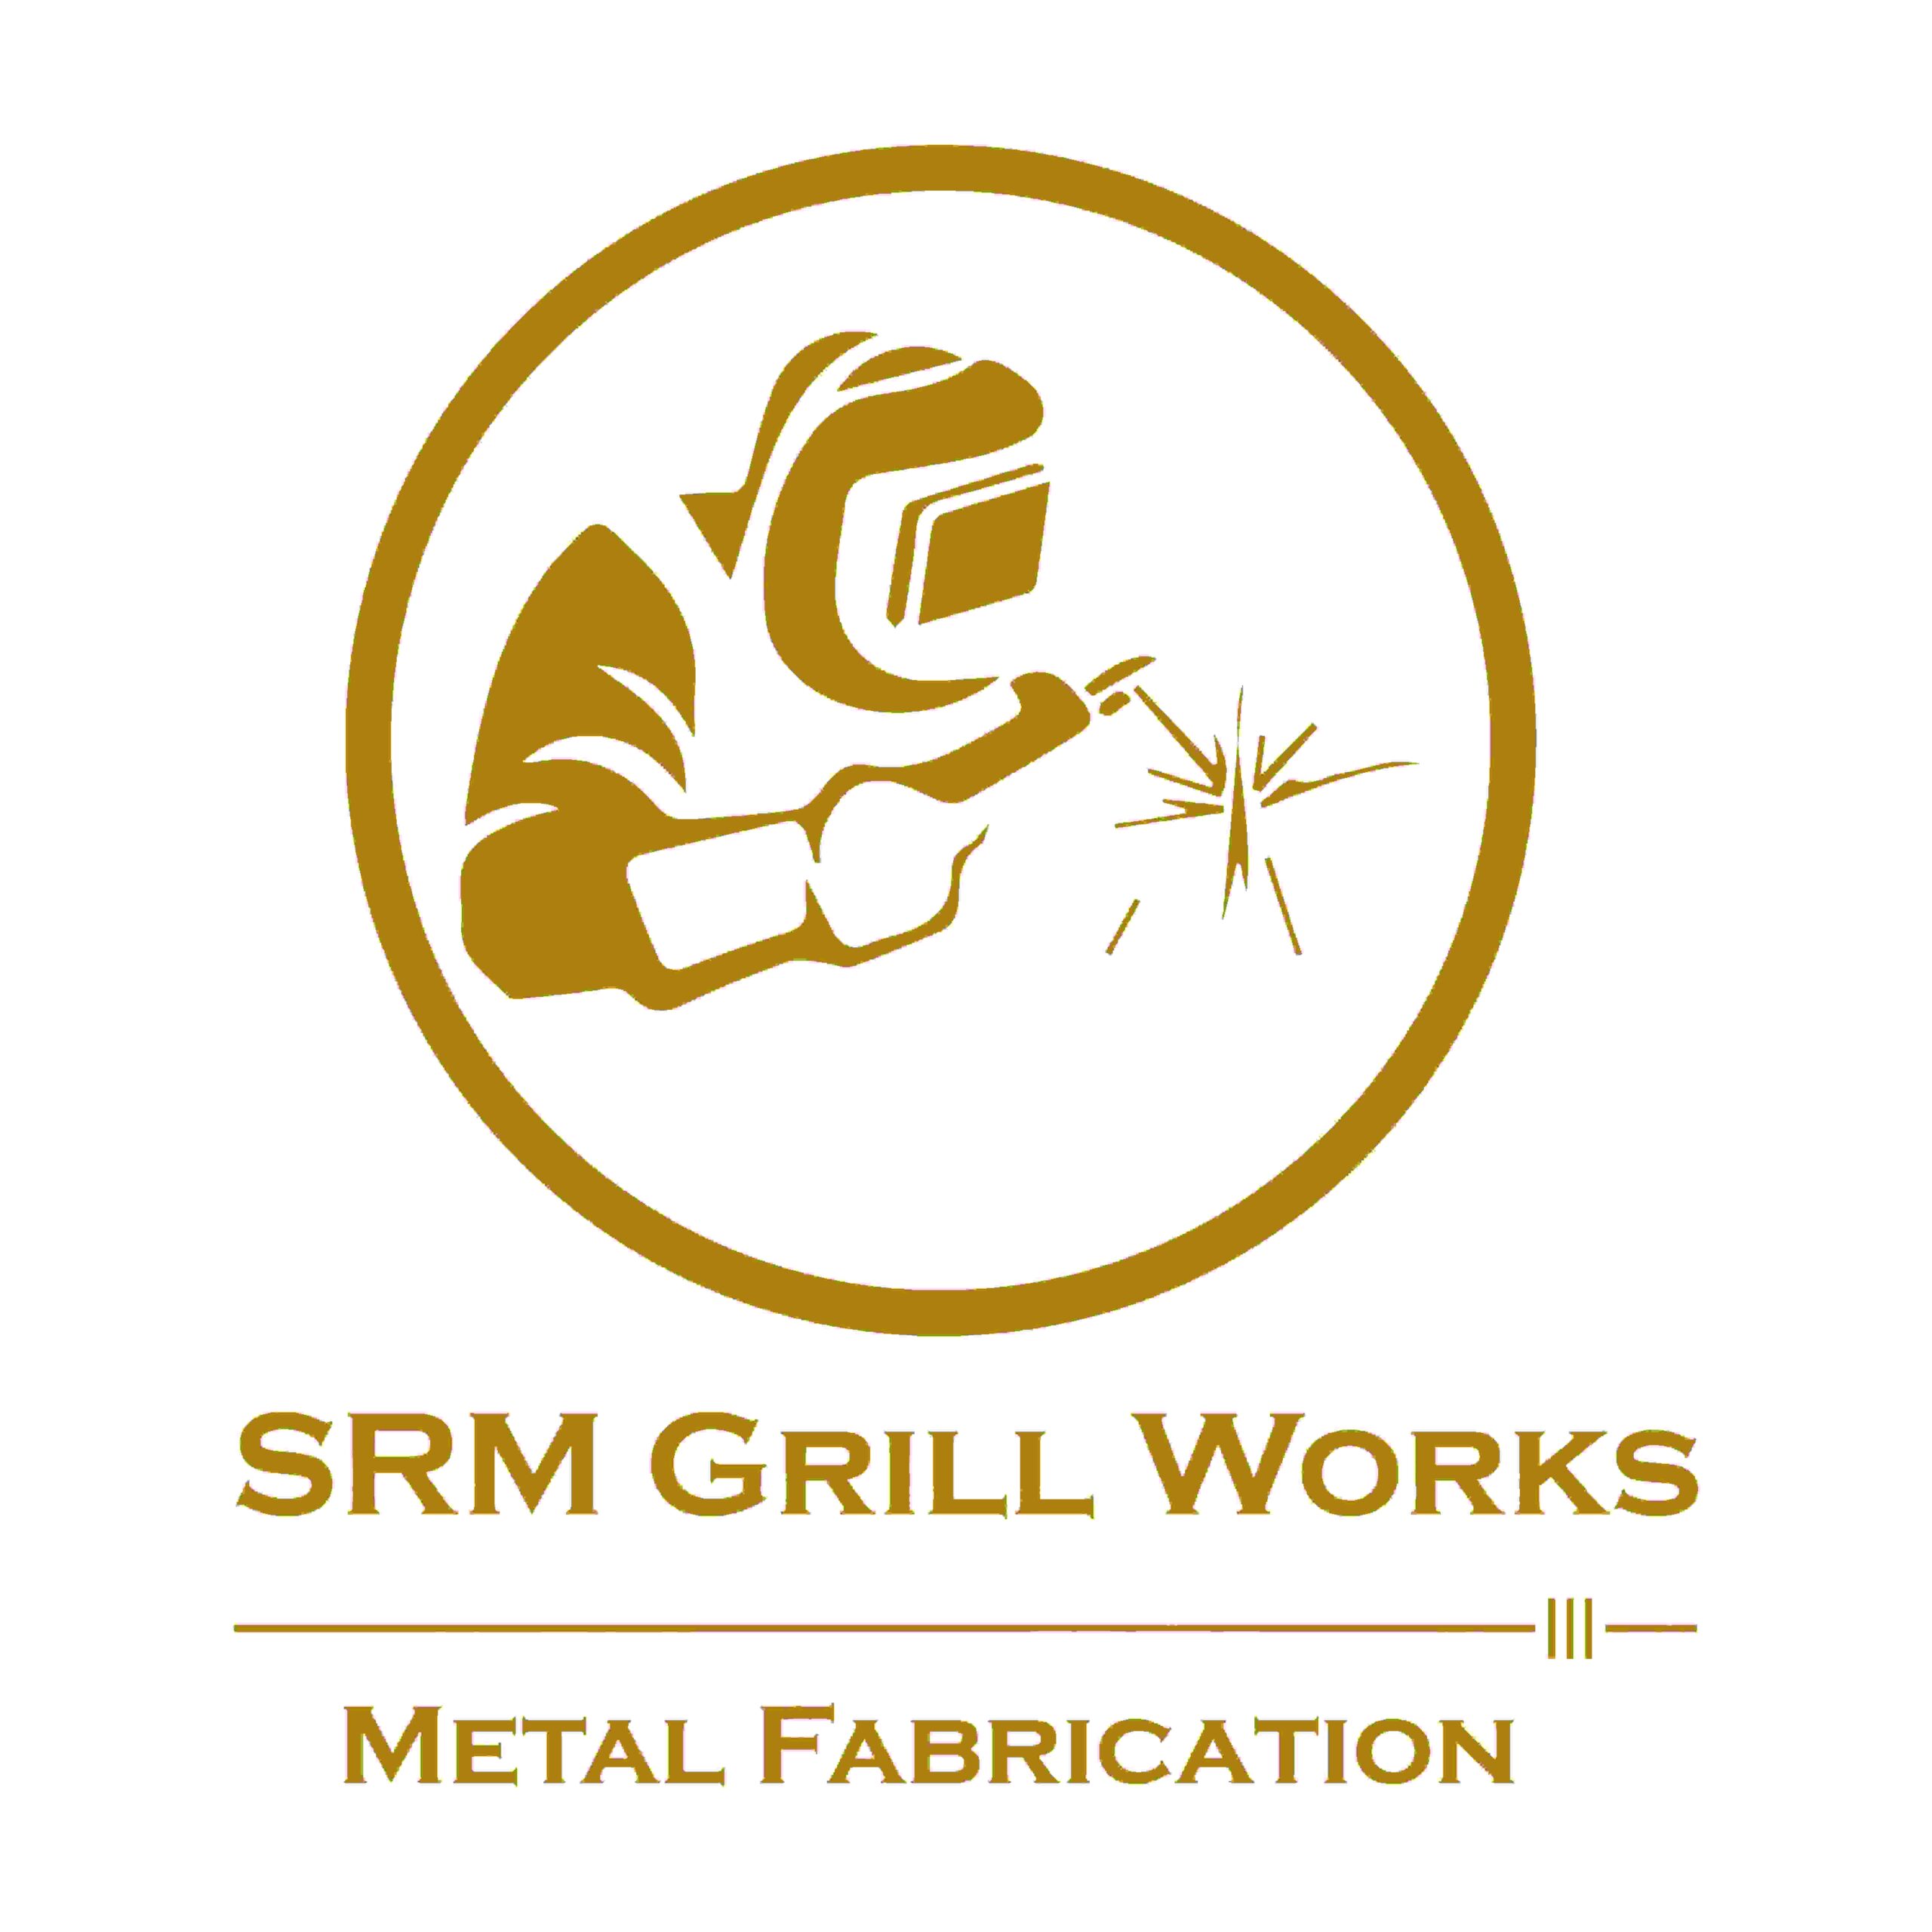 SRM Steel Fabrication Works in Chennai